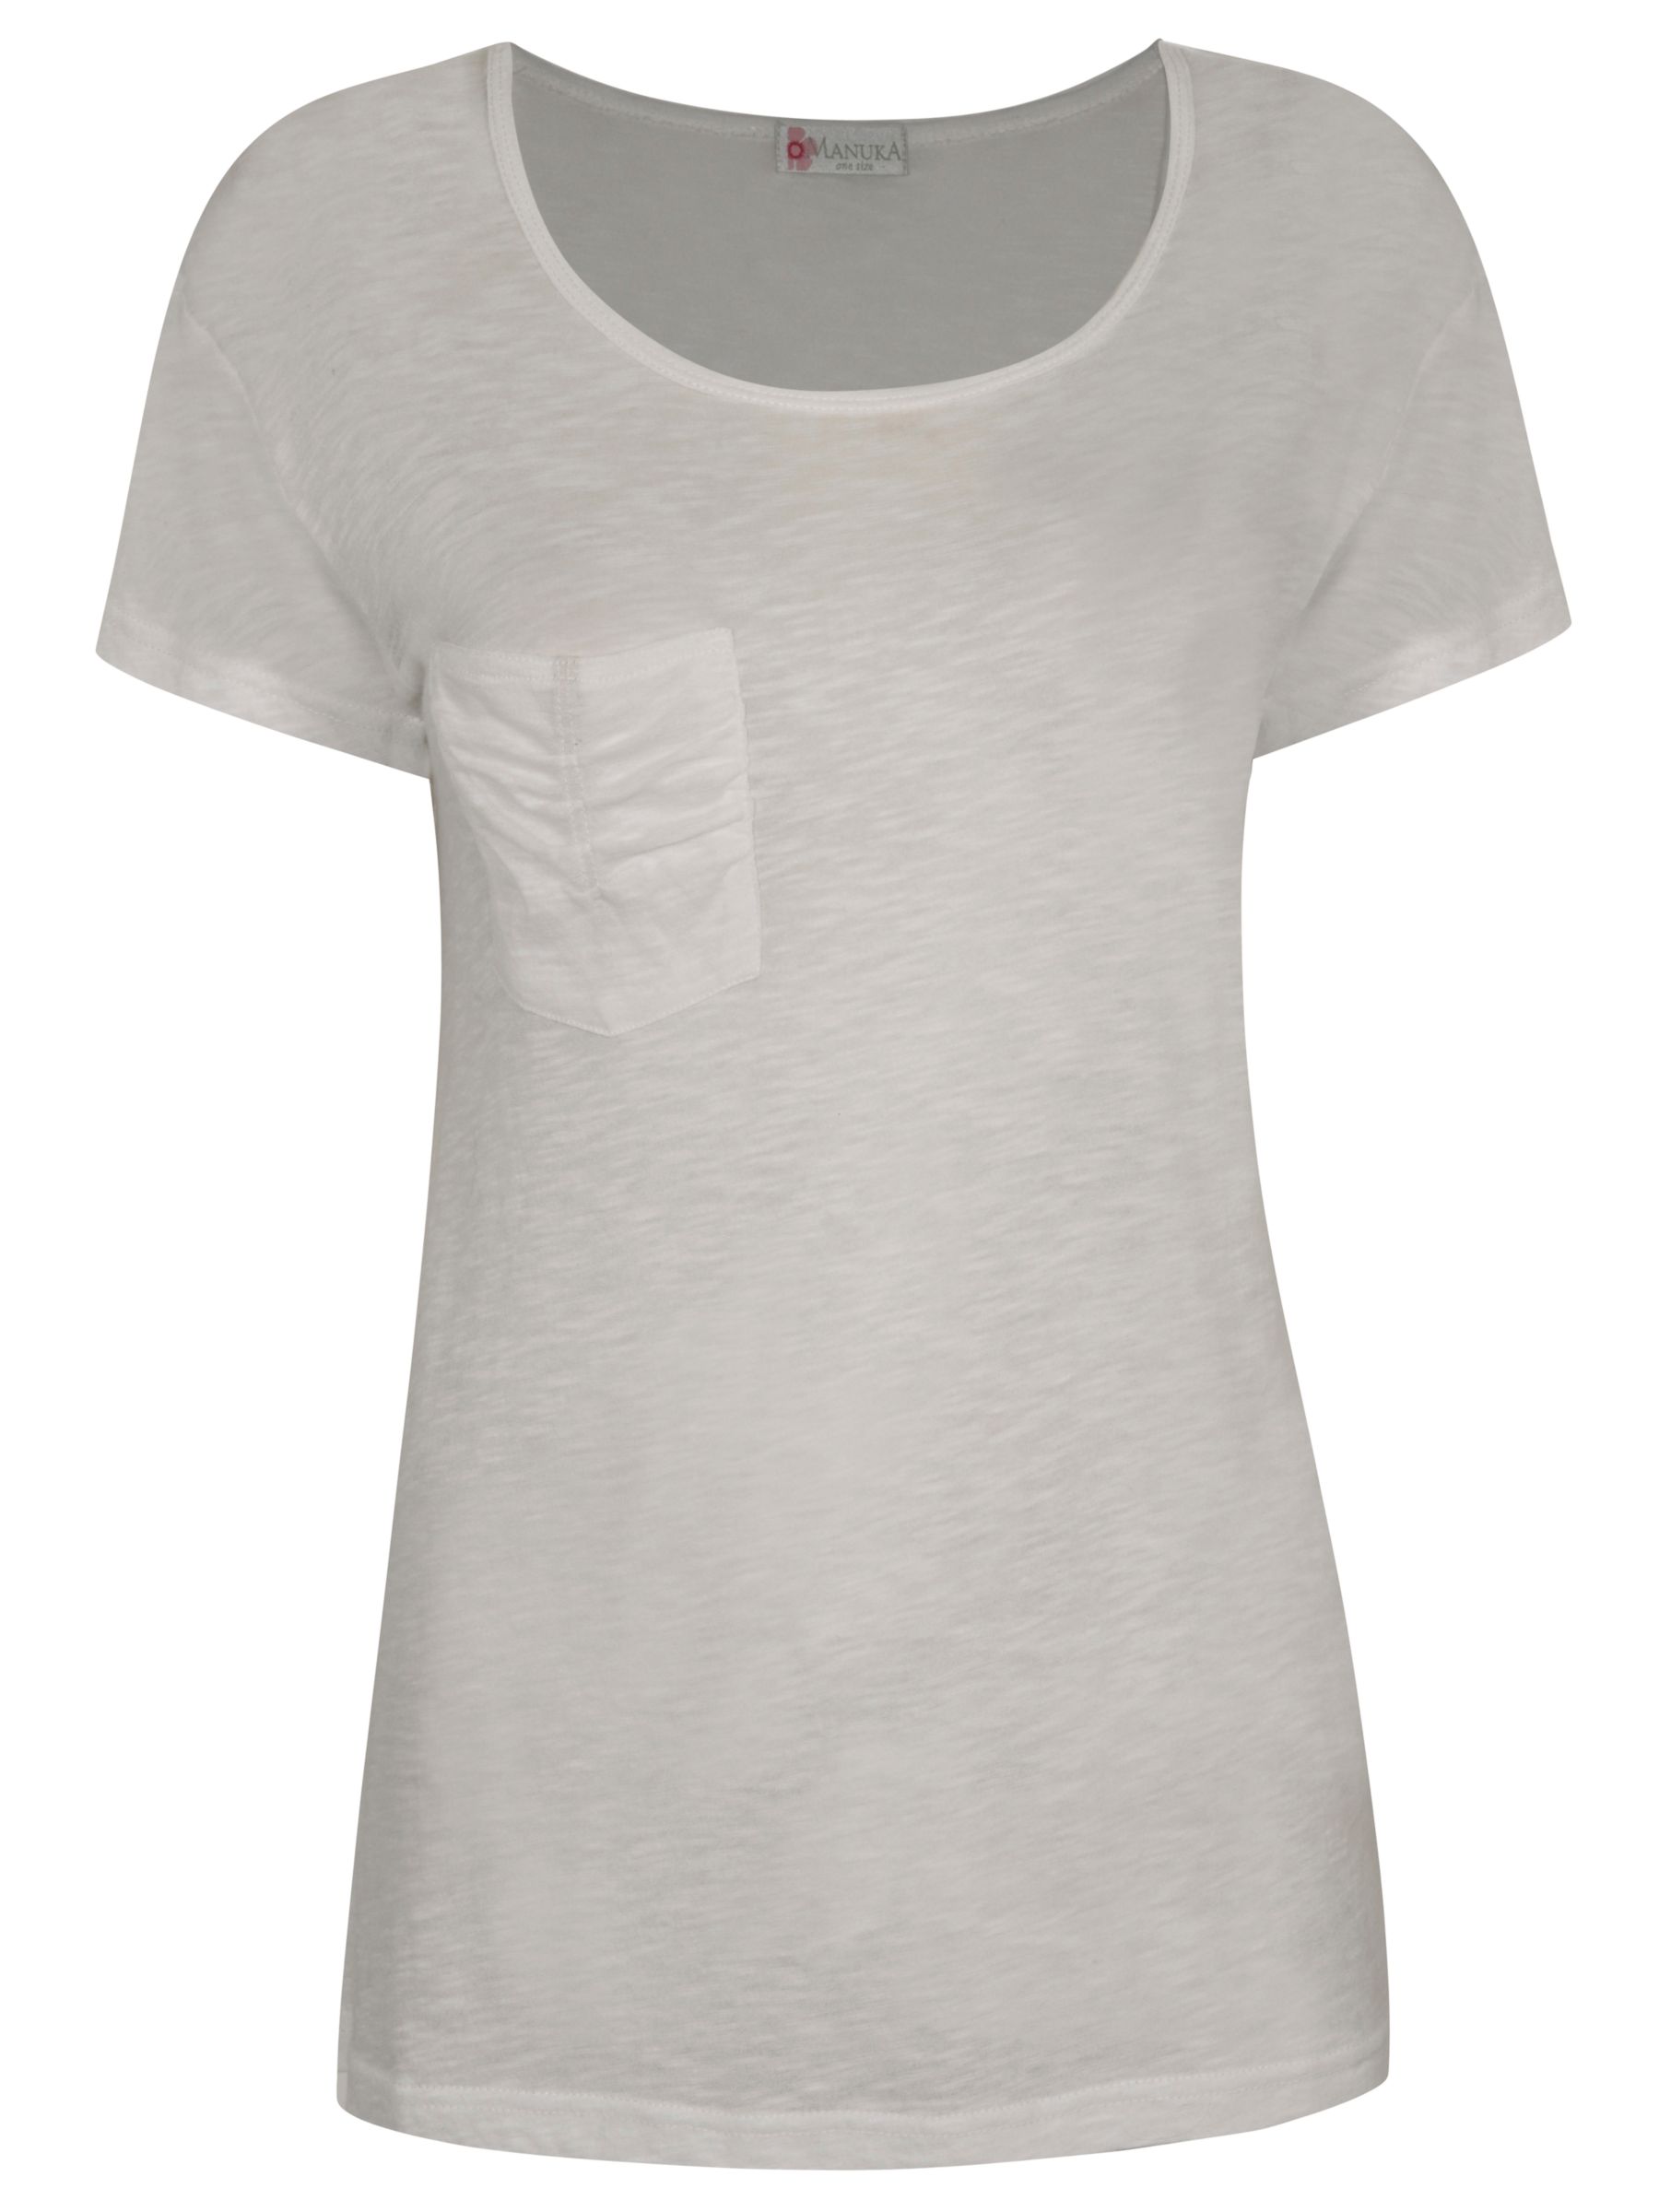 Manuka Bamboo Pocket T-Shirt, White